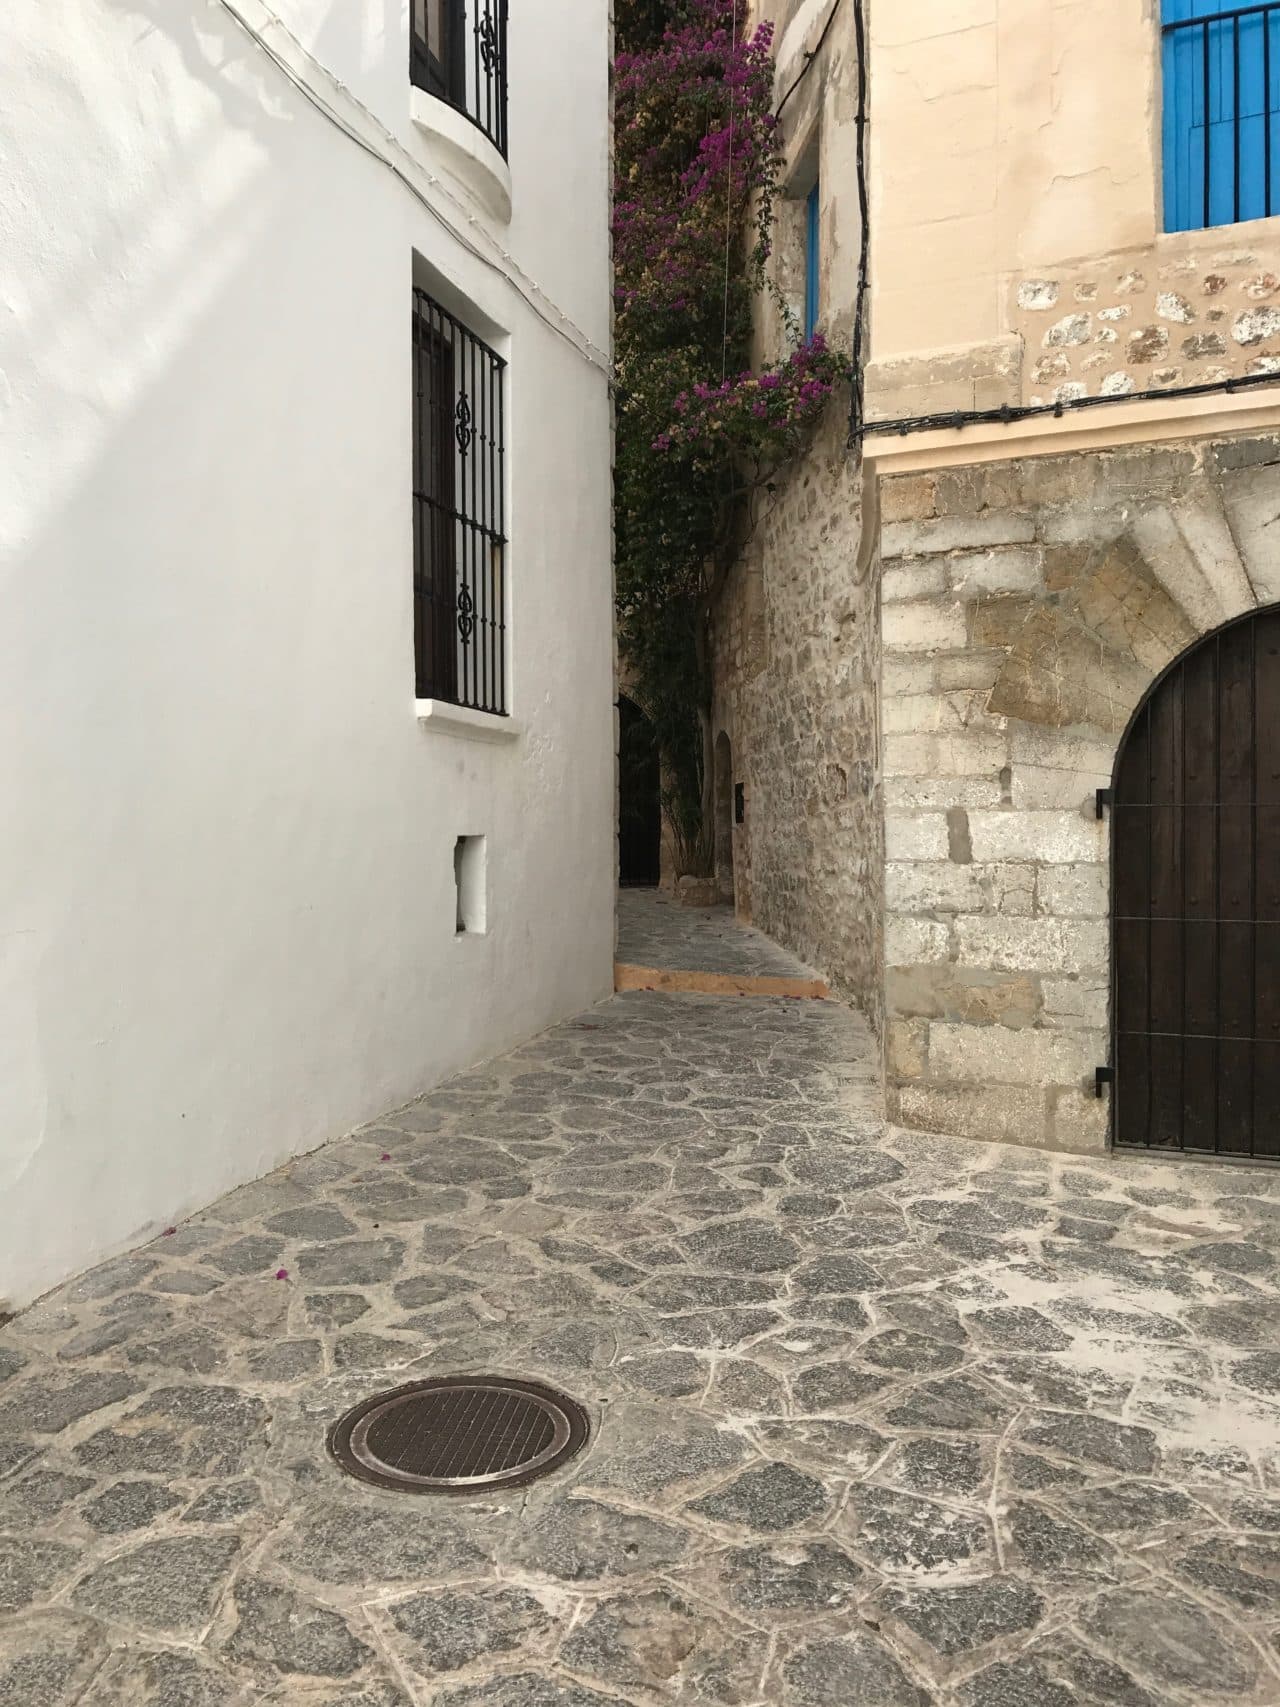 Narrow Alley Walkway In Old City In Ibiza